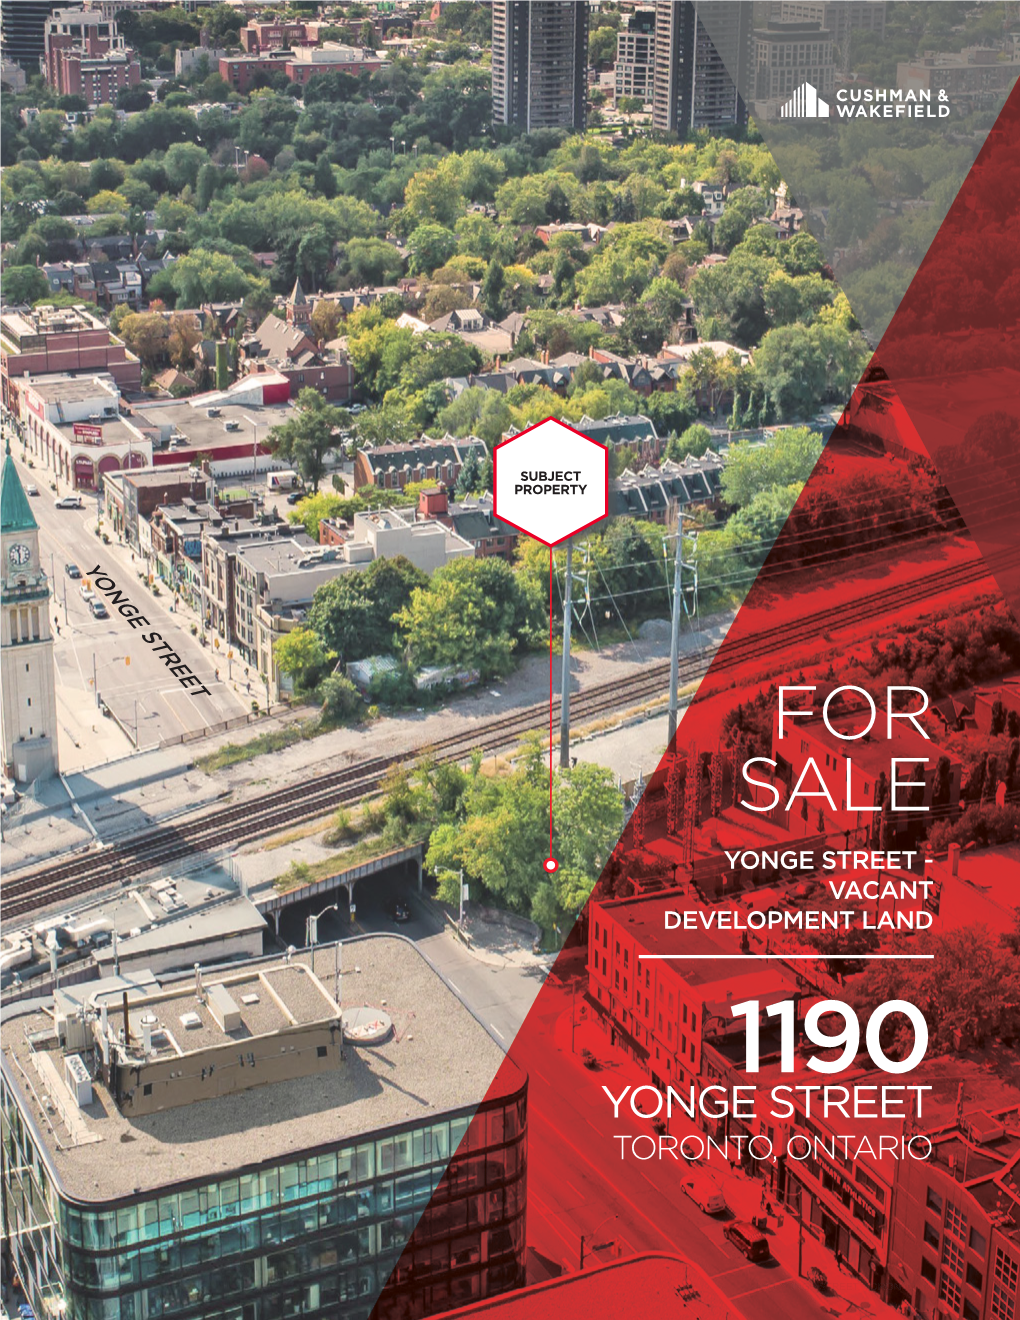 For Sale Yonge Street - Vacant Development Land 1190 Yonge Street Toronto, Ontario